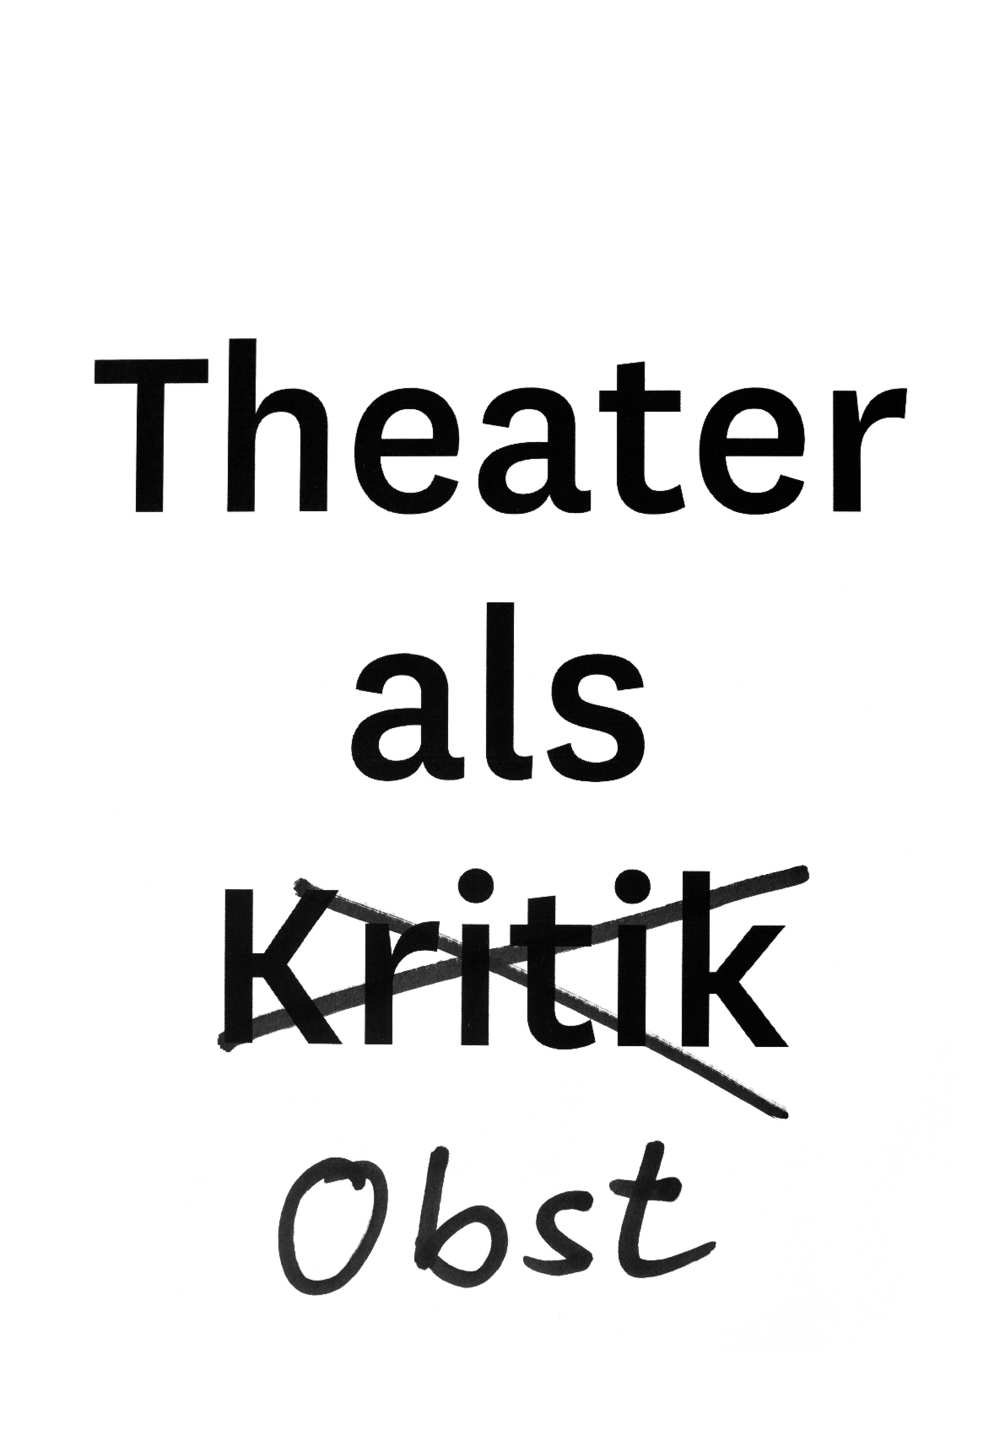 theater-as-critique-slip-34-1005x1435px